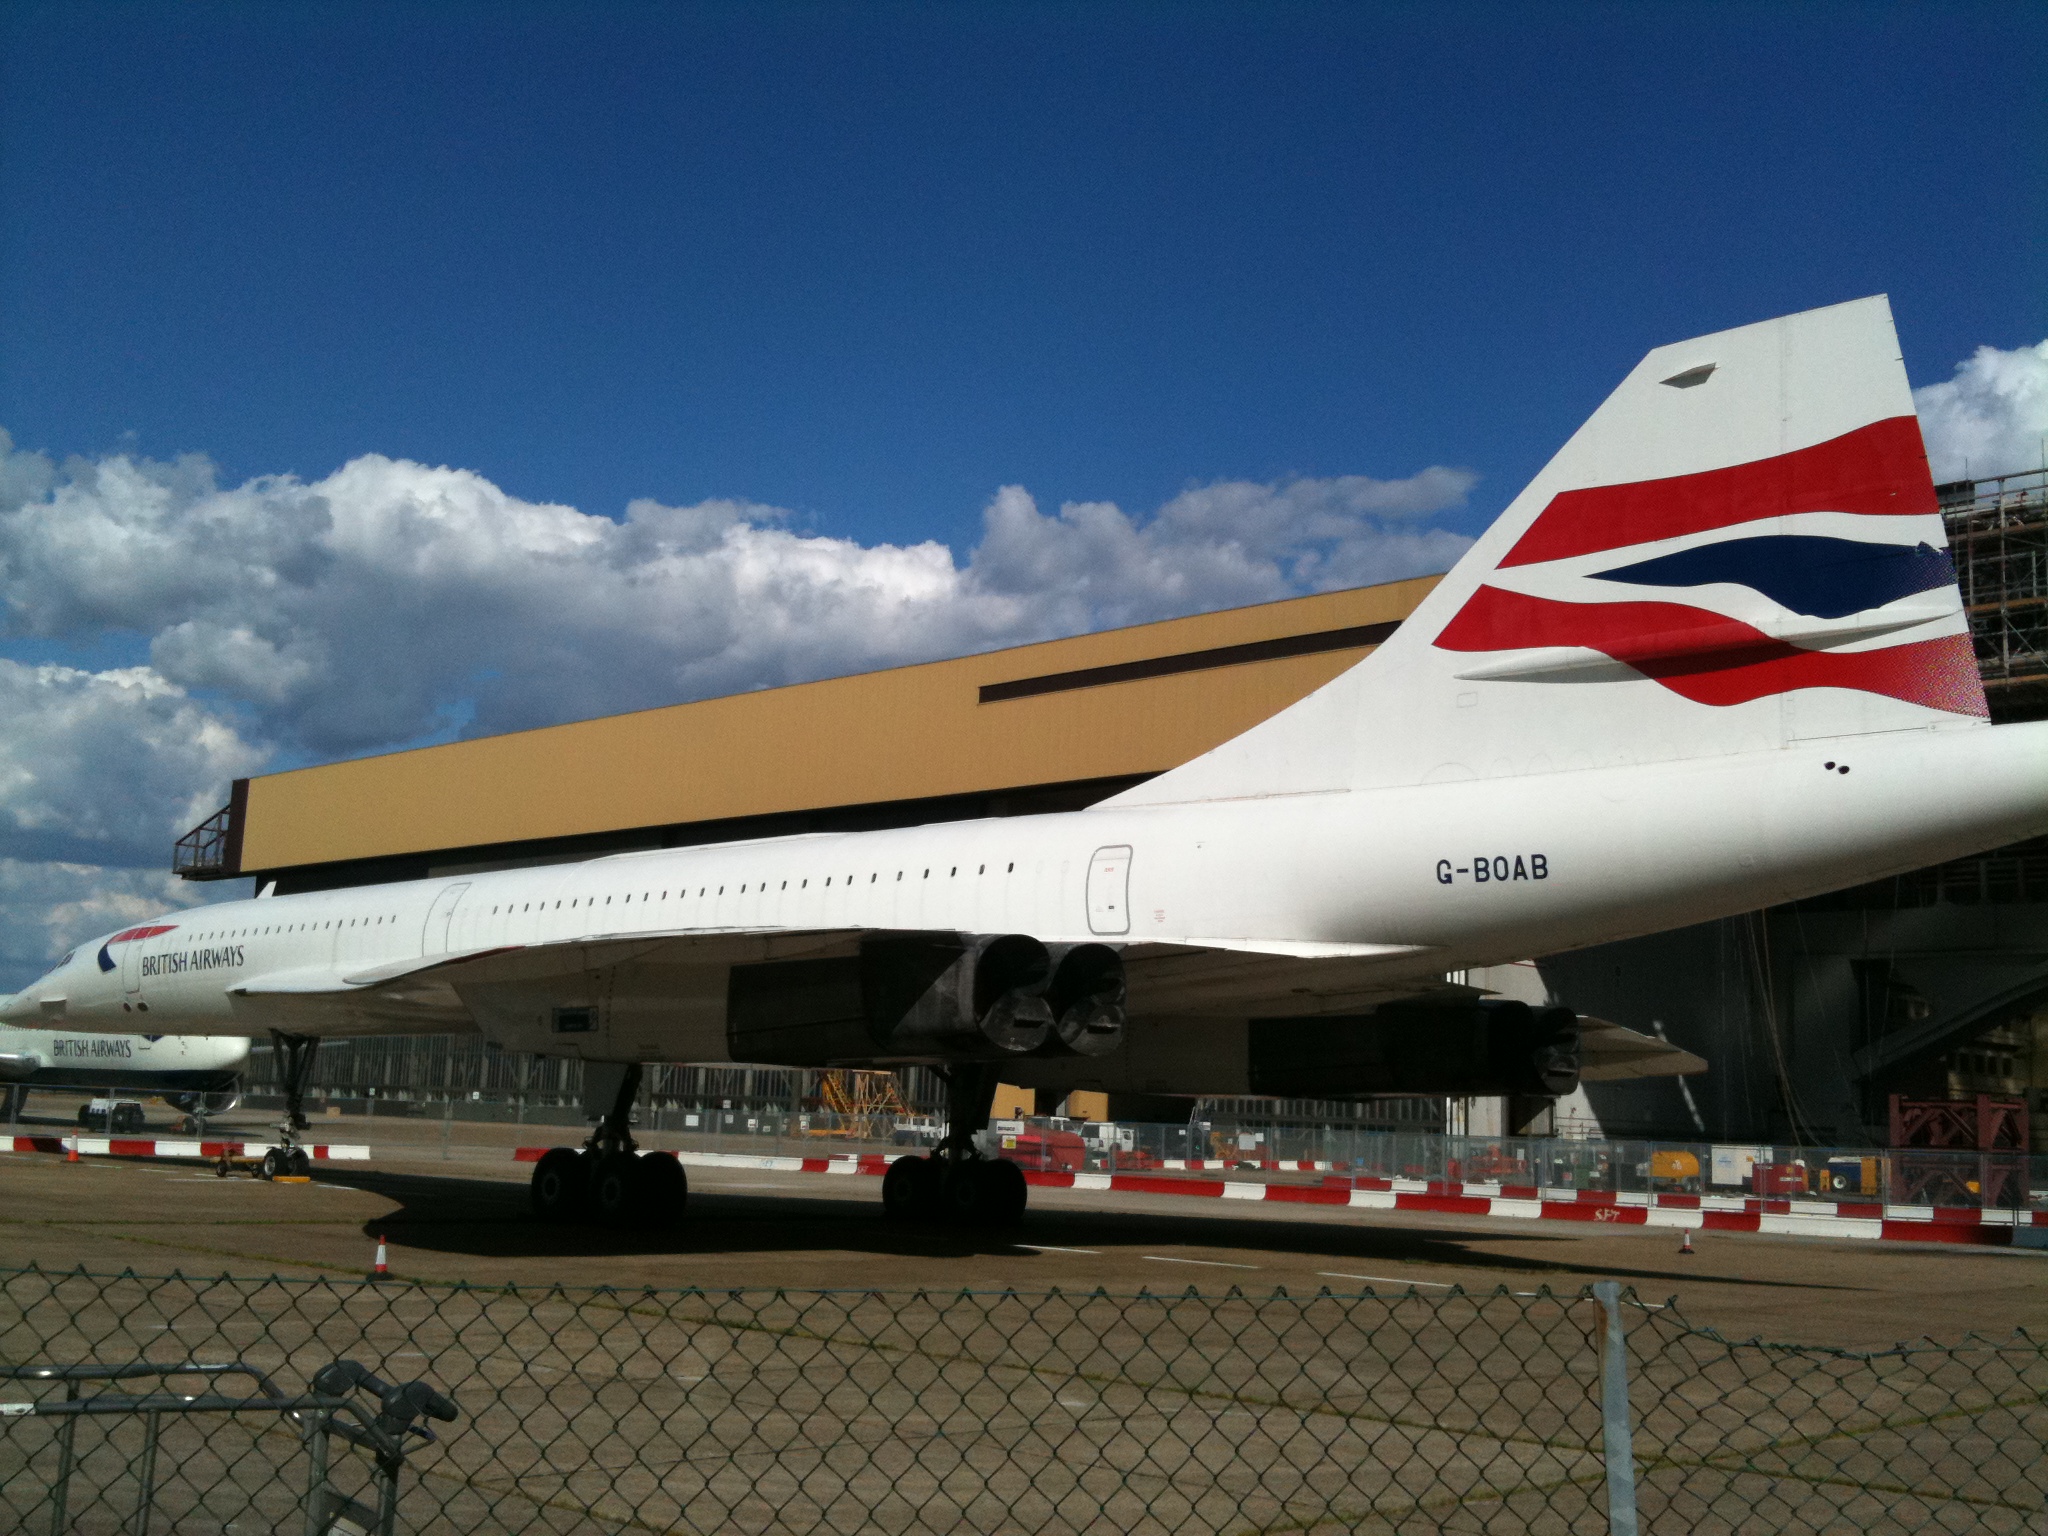 A Heathrow-n maradt Concorde